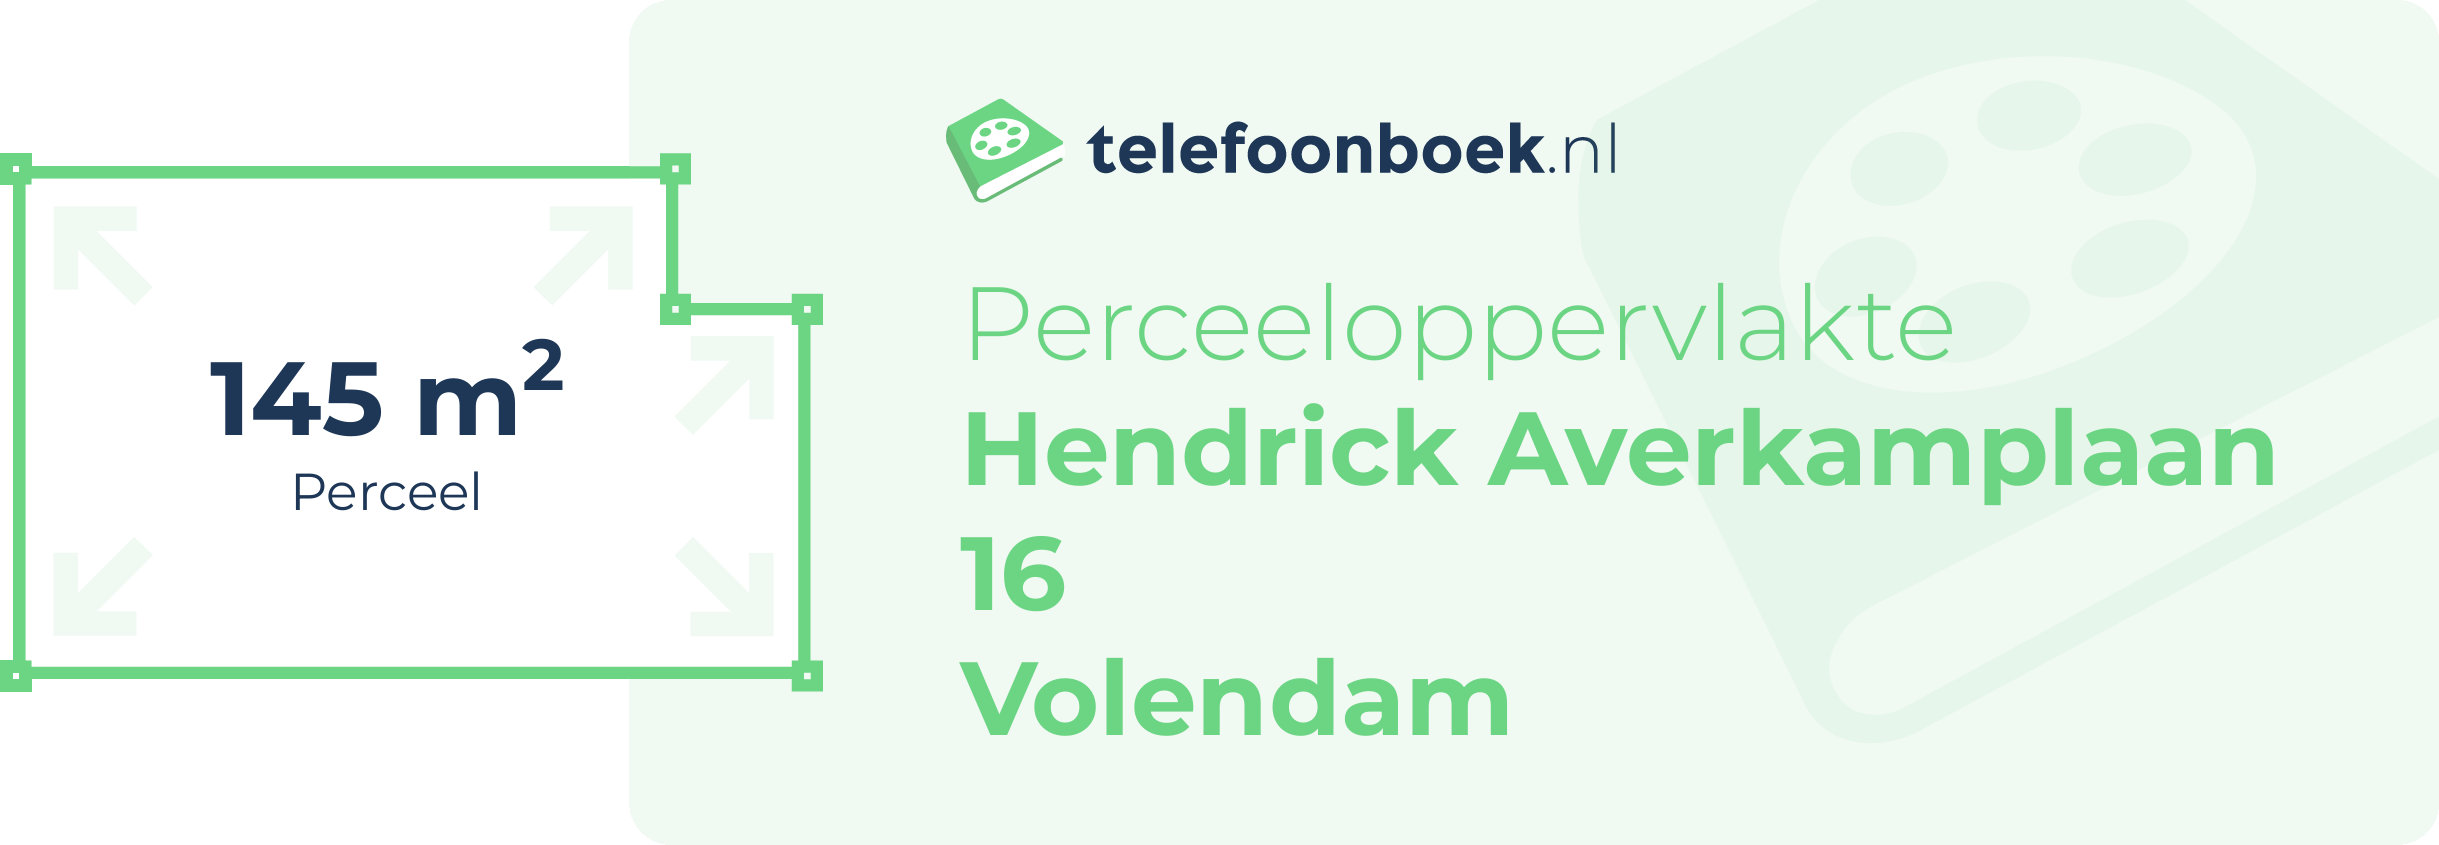 Perceeloppervlakte Hendrick Averkamplaan 16 Volendam